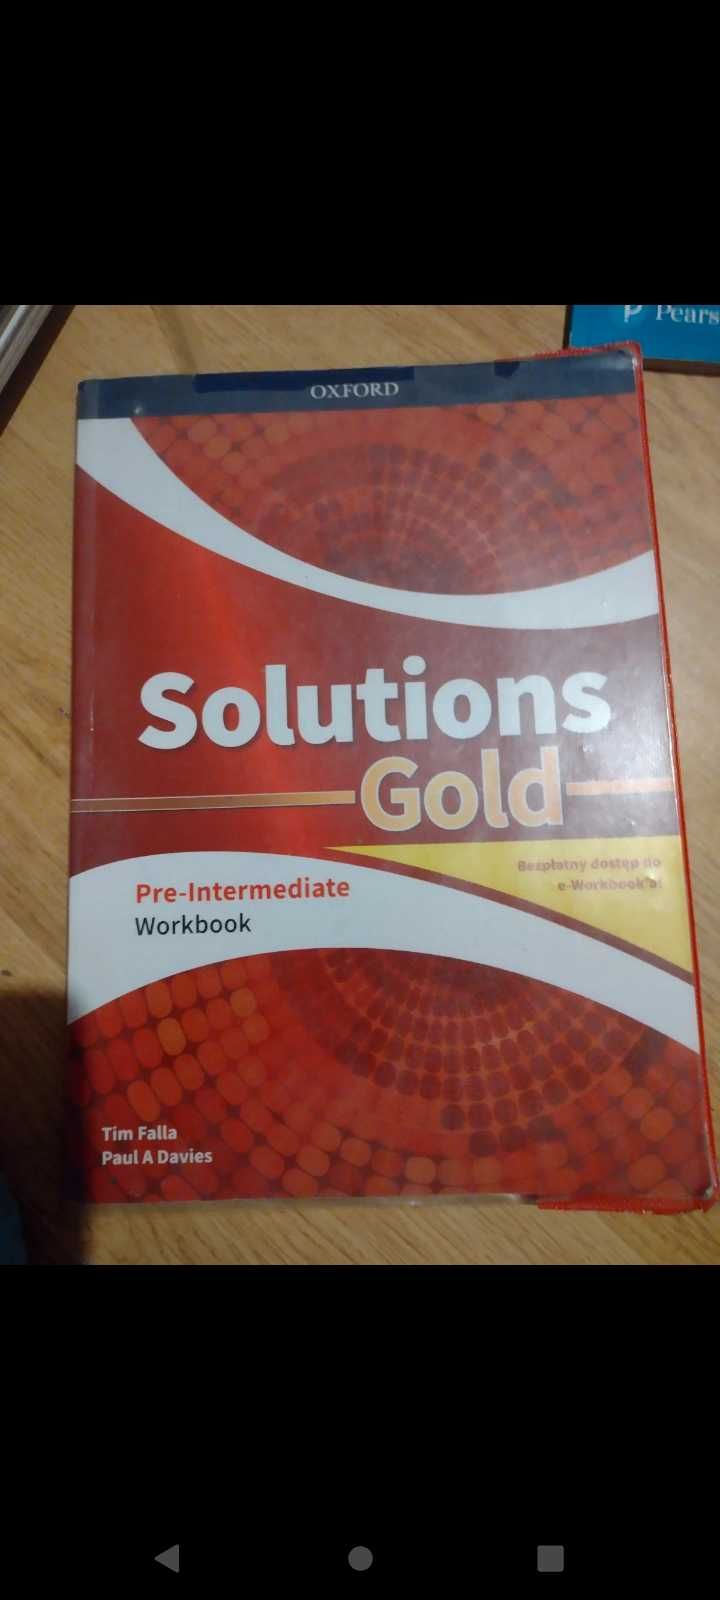 Podręcznik solutions gold